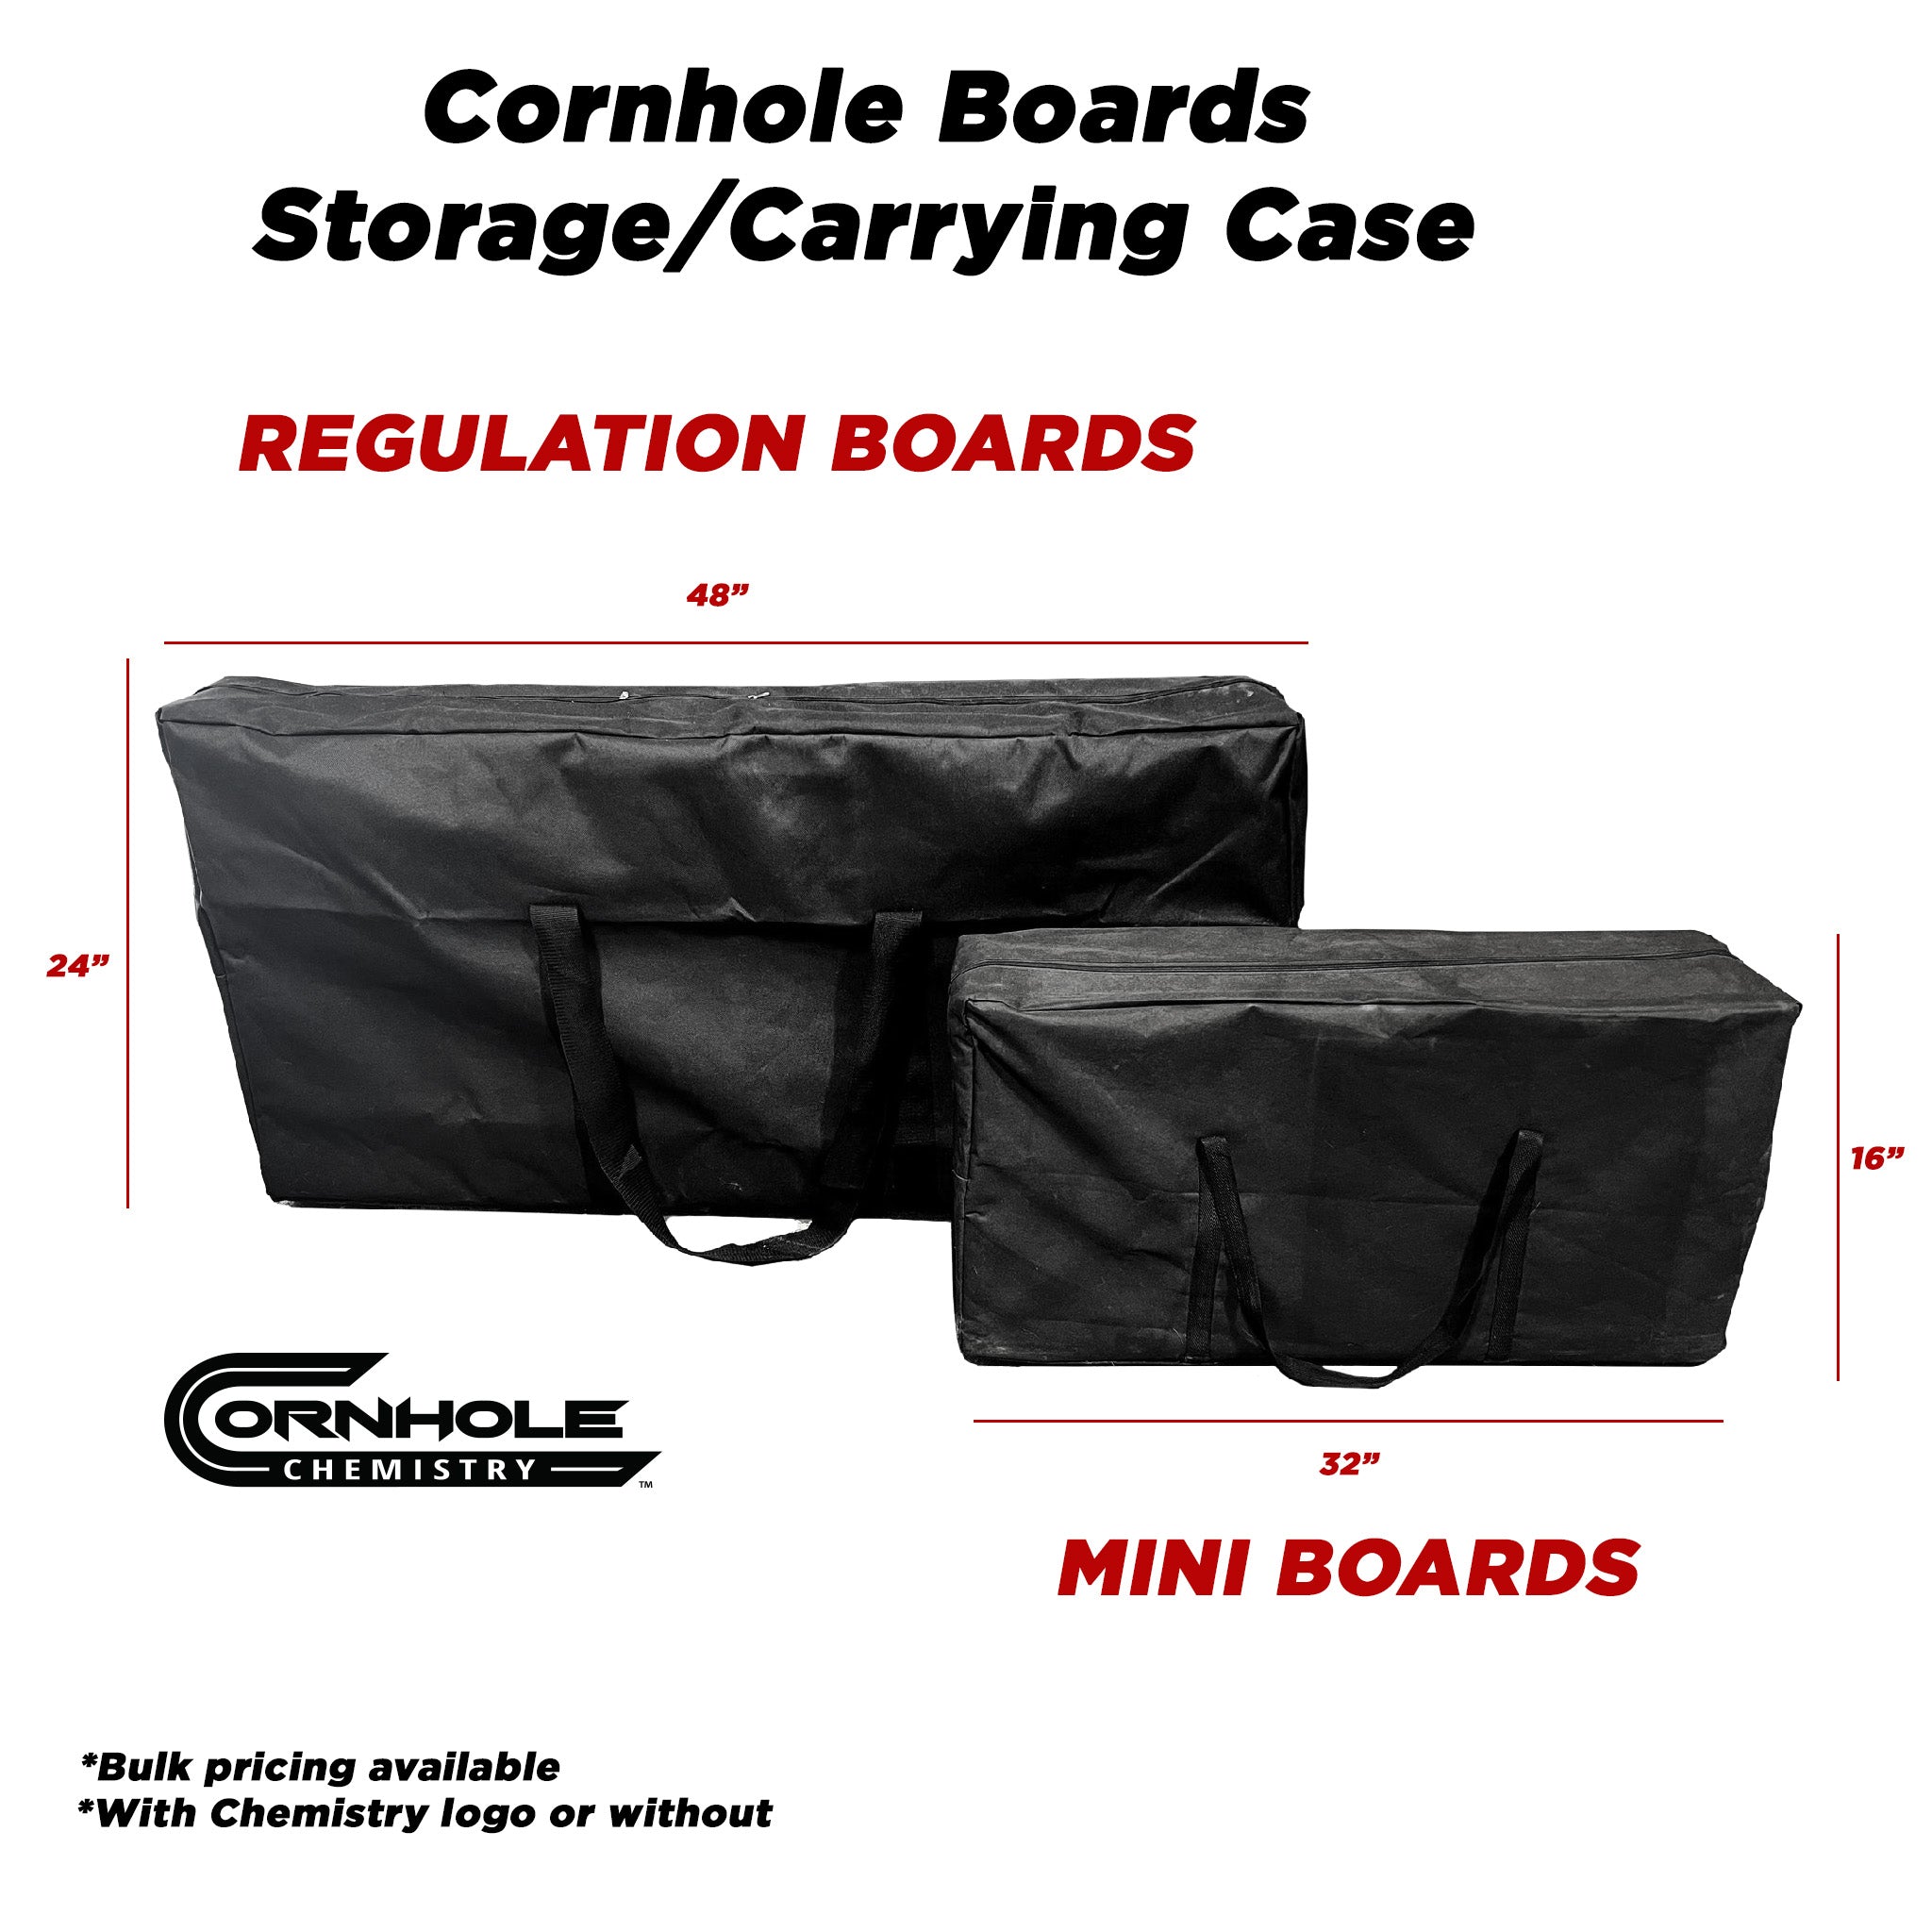 Cornhole Board Storage/Carrying case